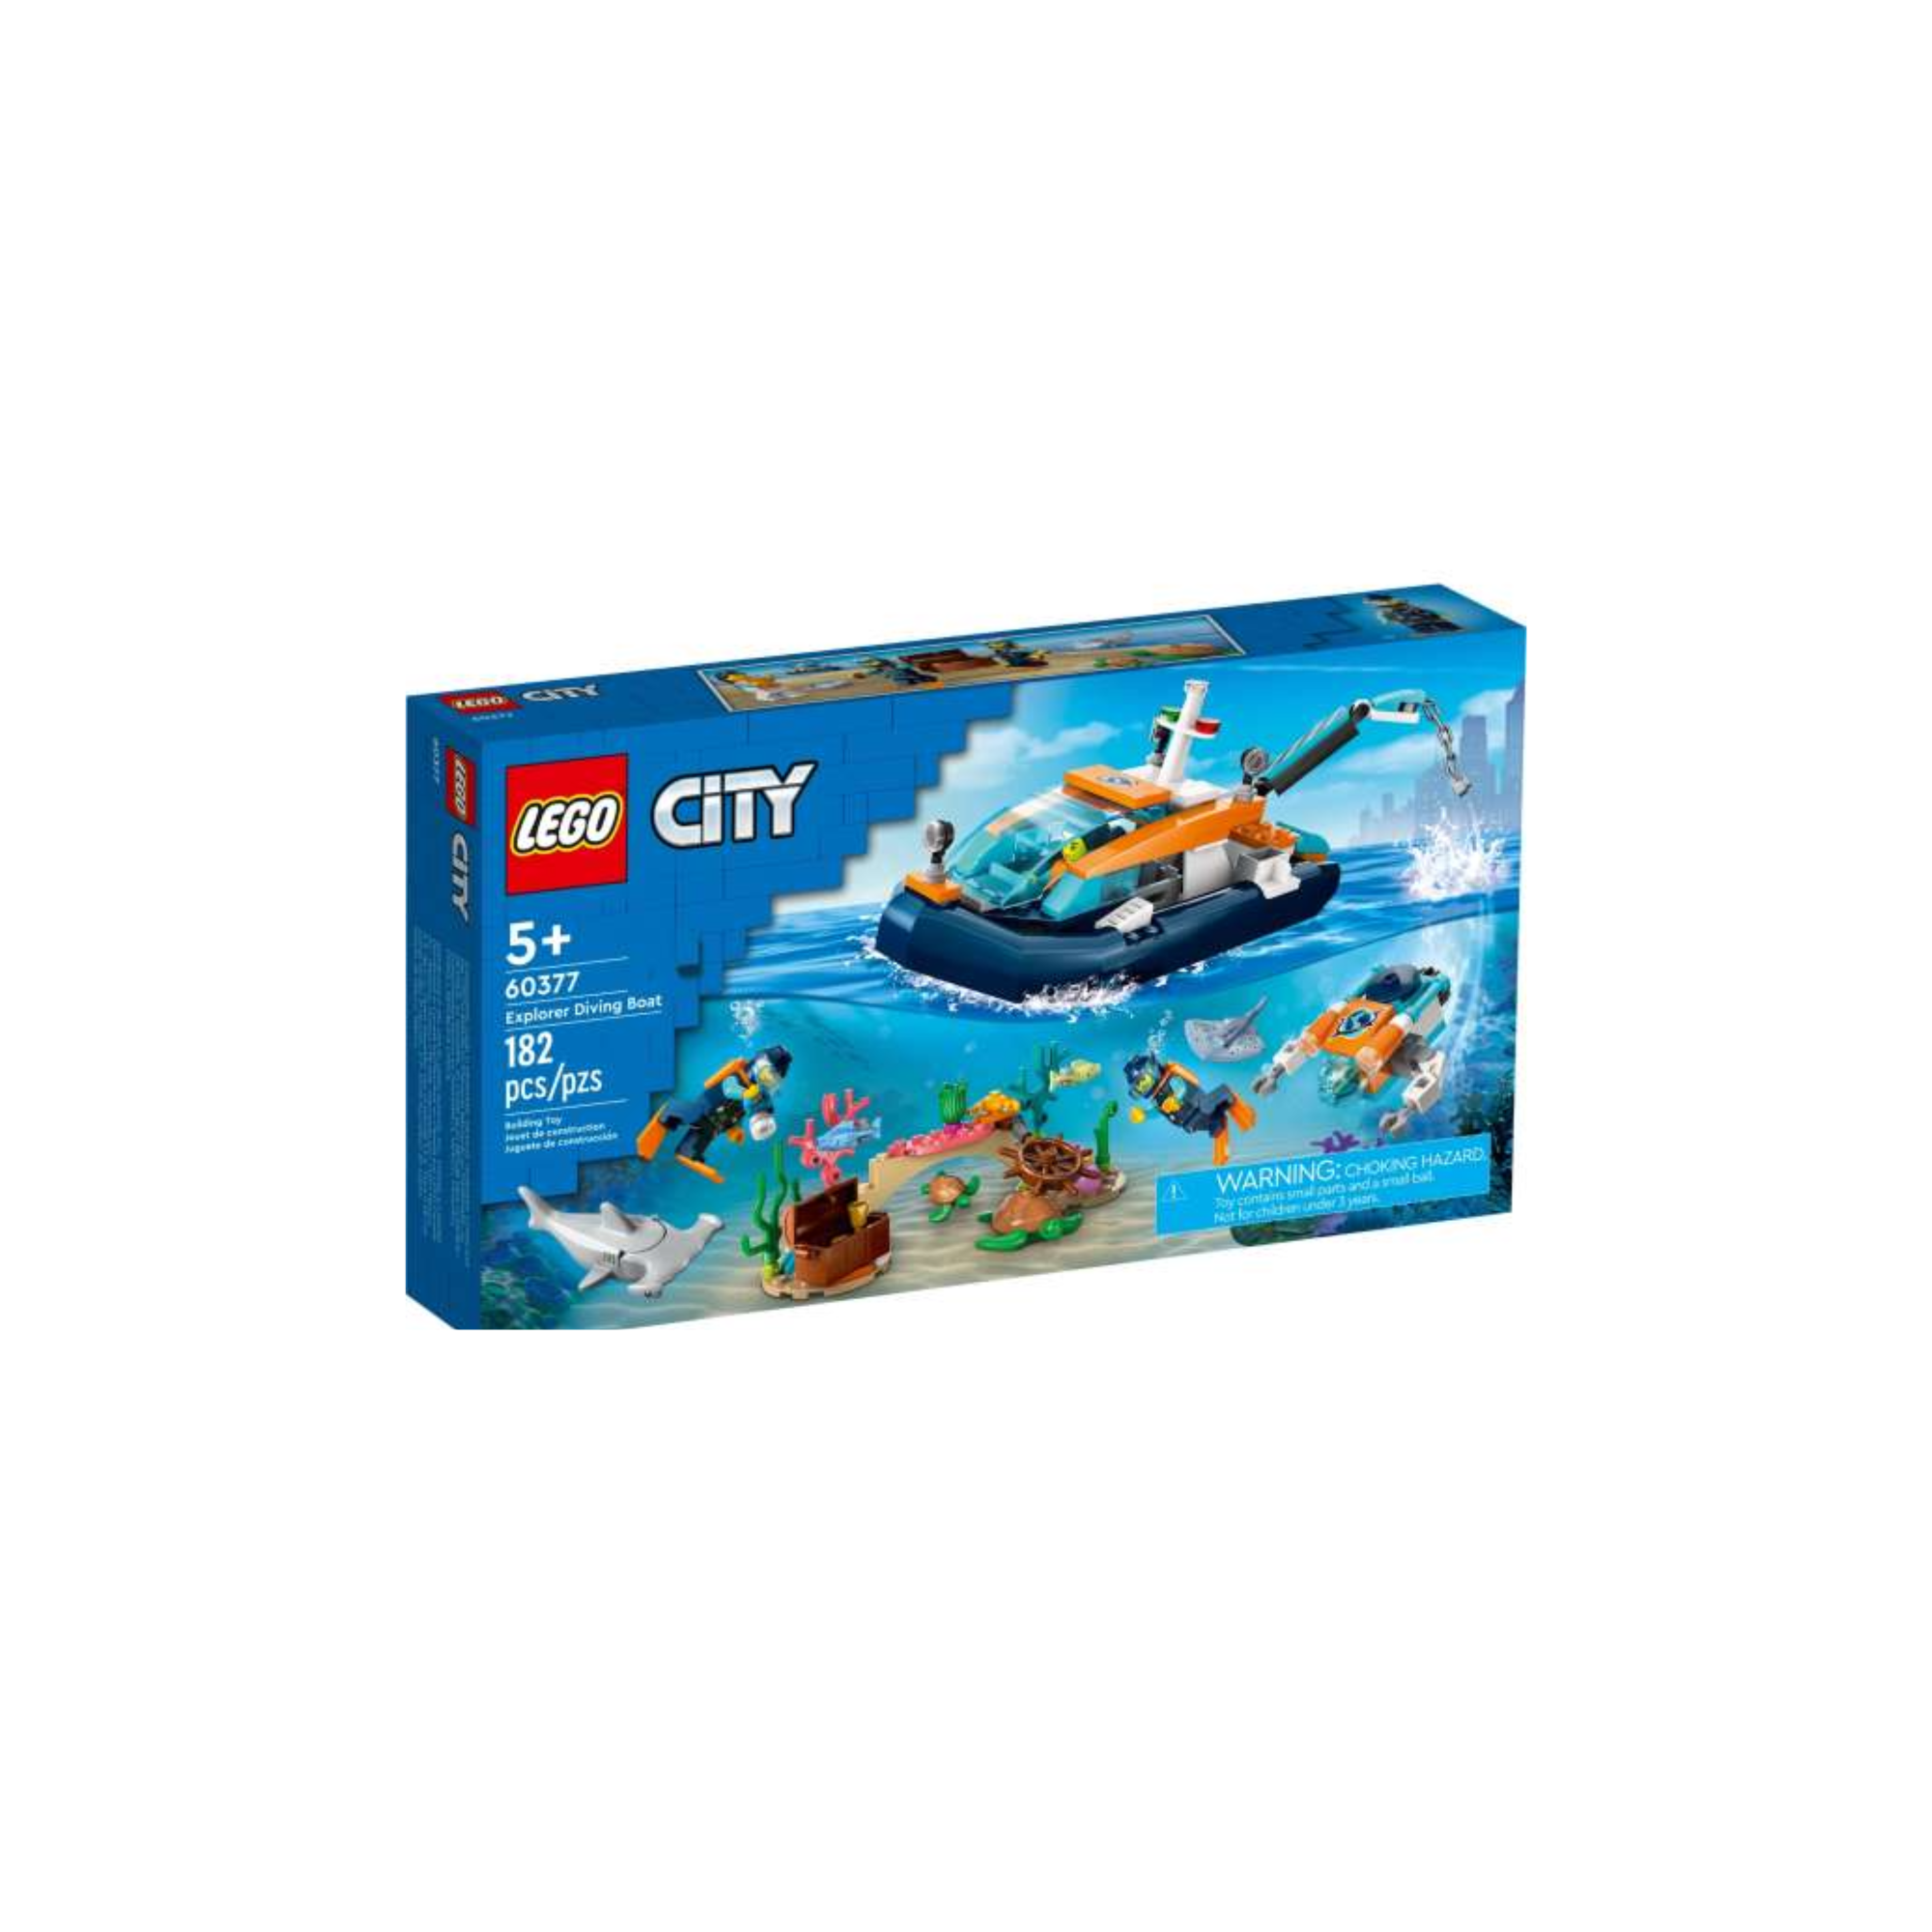 Lego City City Explorer Diving Boat